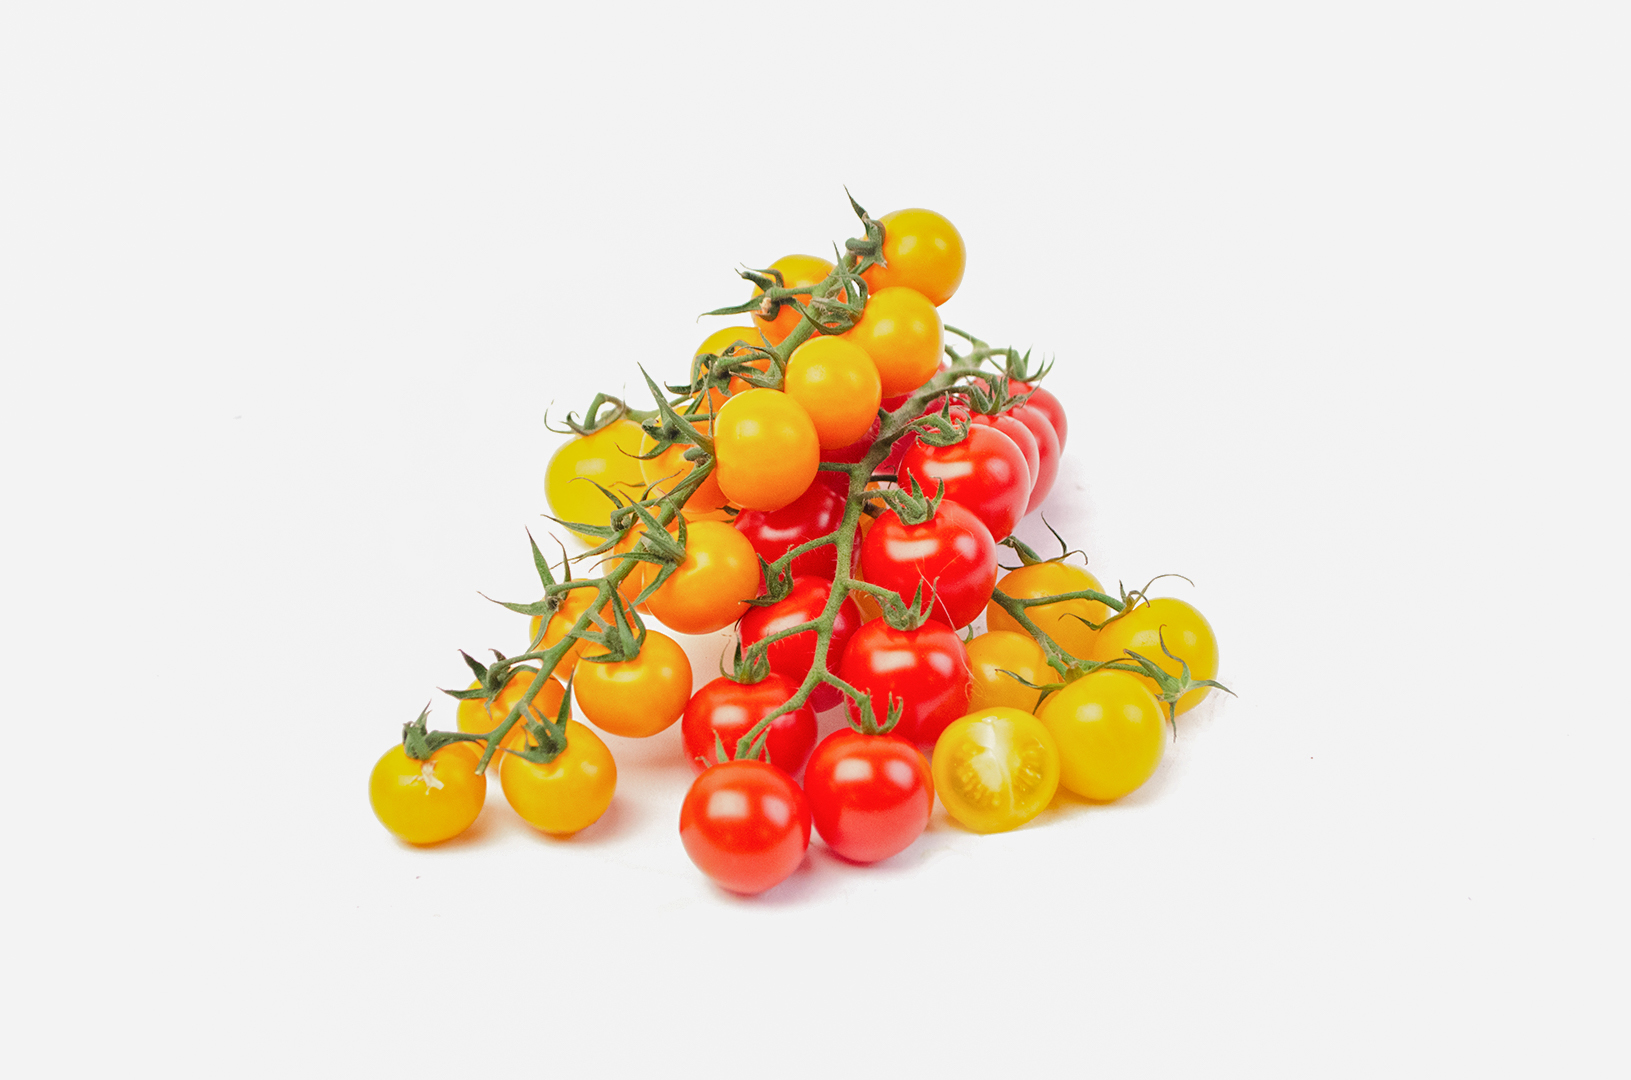 Golden Taste Tomaten (Cherry Strauch) Kiste